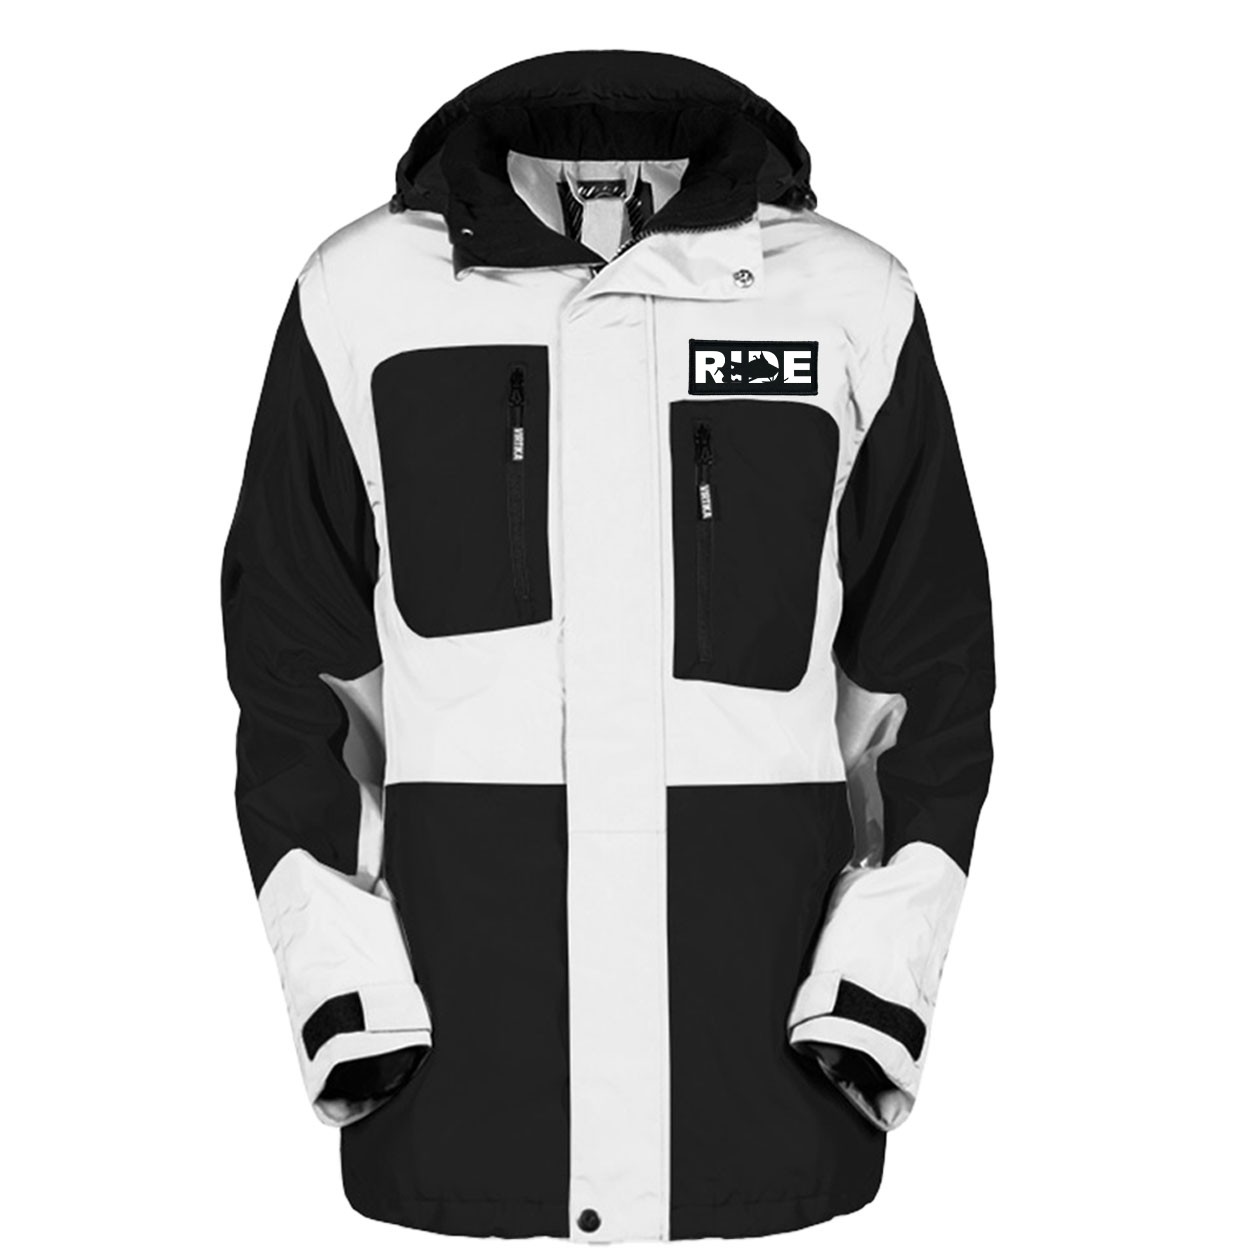 Ride Snowmobile Logo Classic Woven Patch Pro Snowboard Jacket (Black/White)